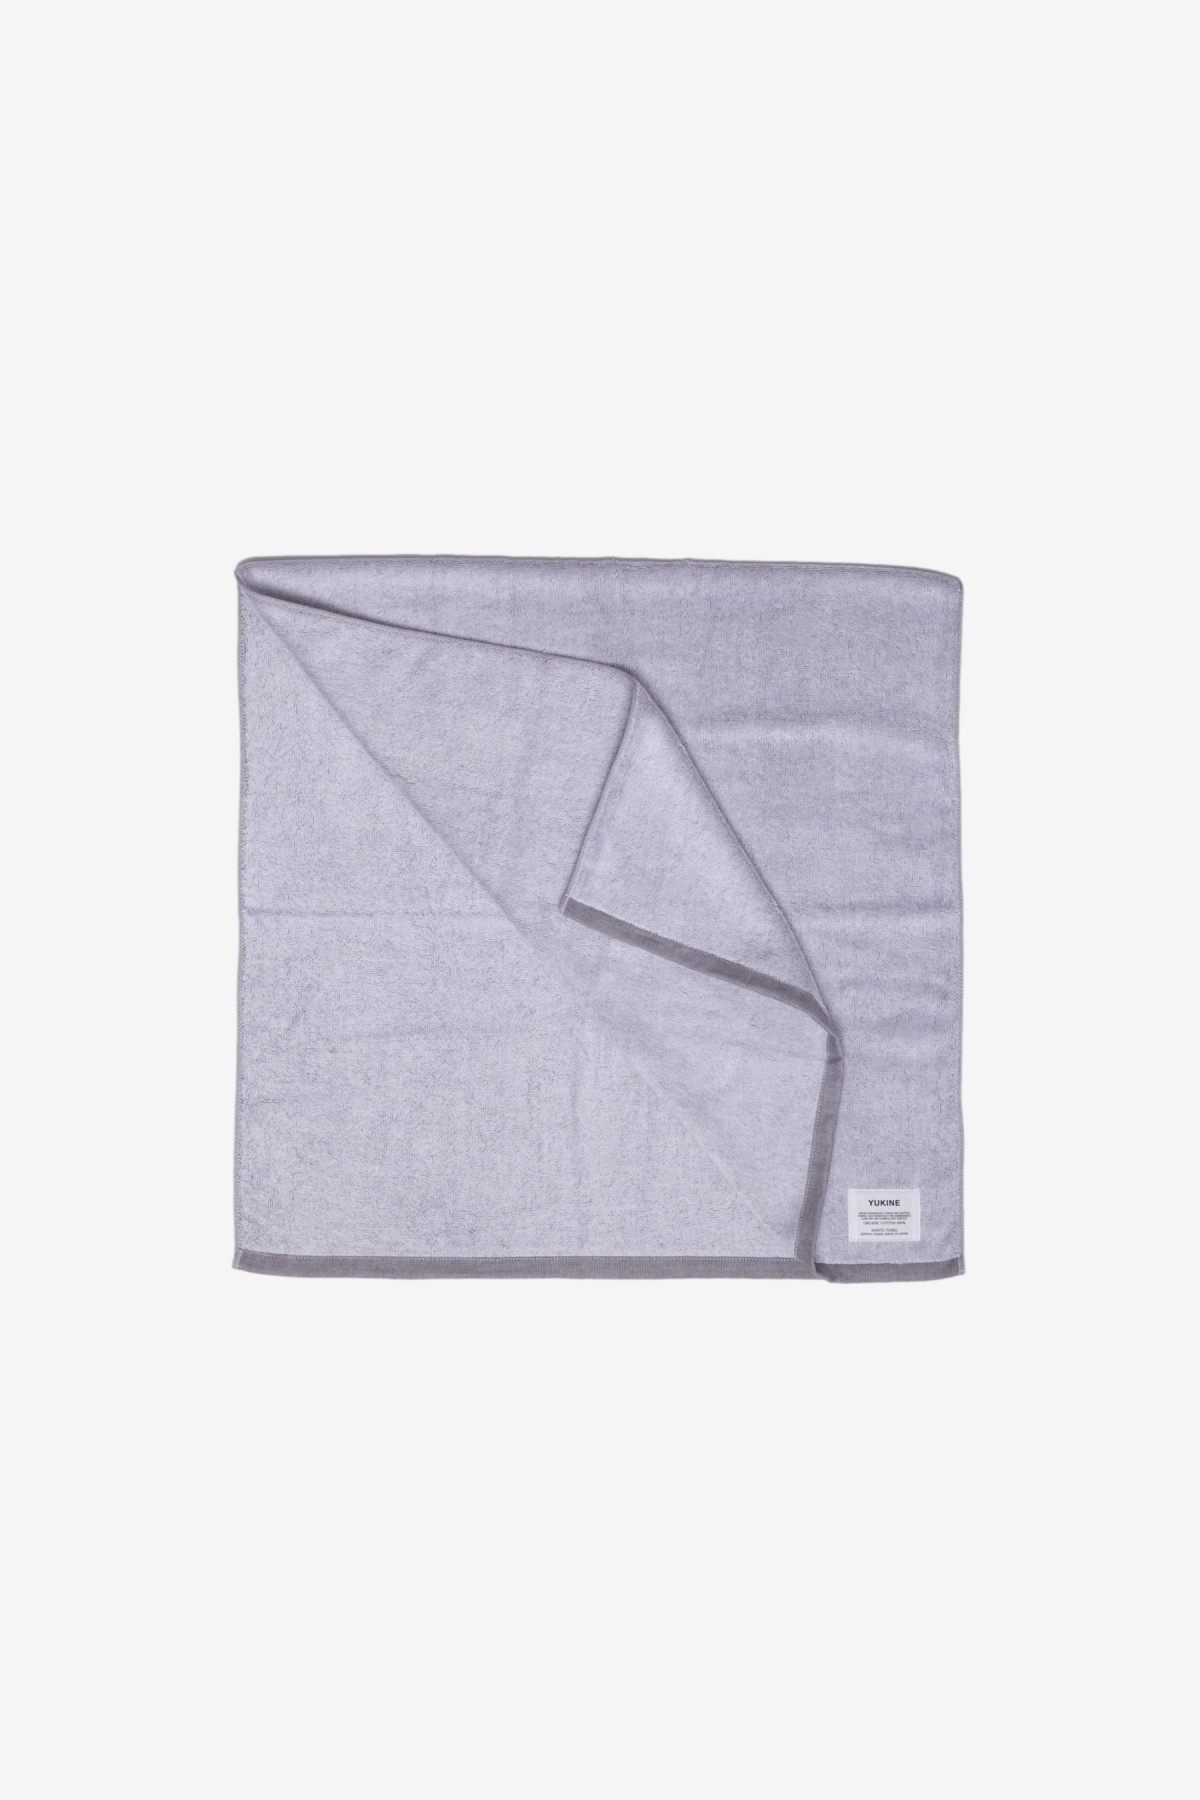 Shinto Yukine  Bath Towel Hai in Grey